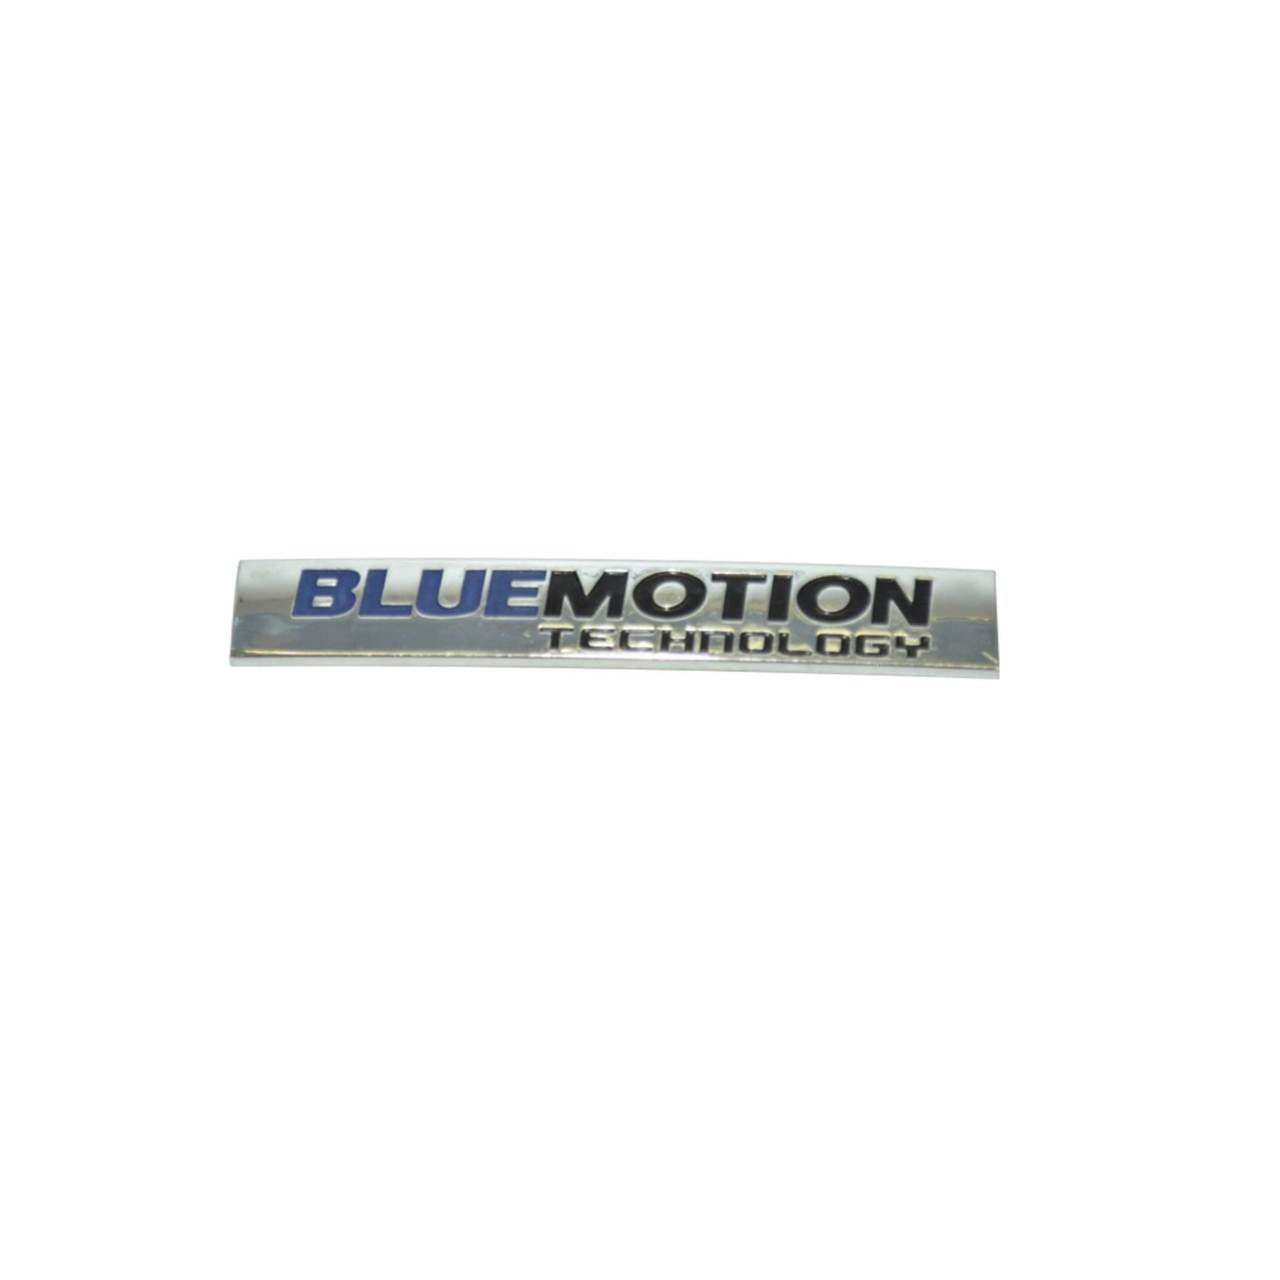 Yazı - Bluemotion Technology - Jetta - 2011 - 2014